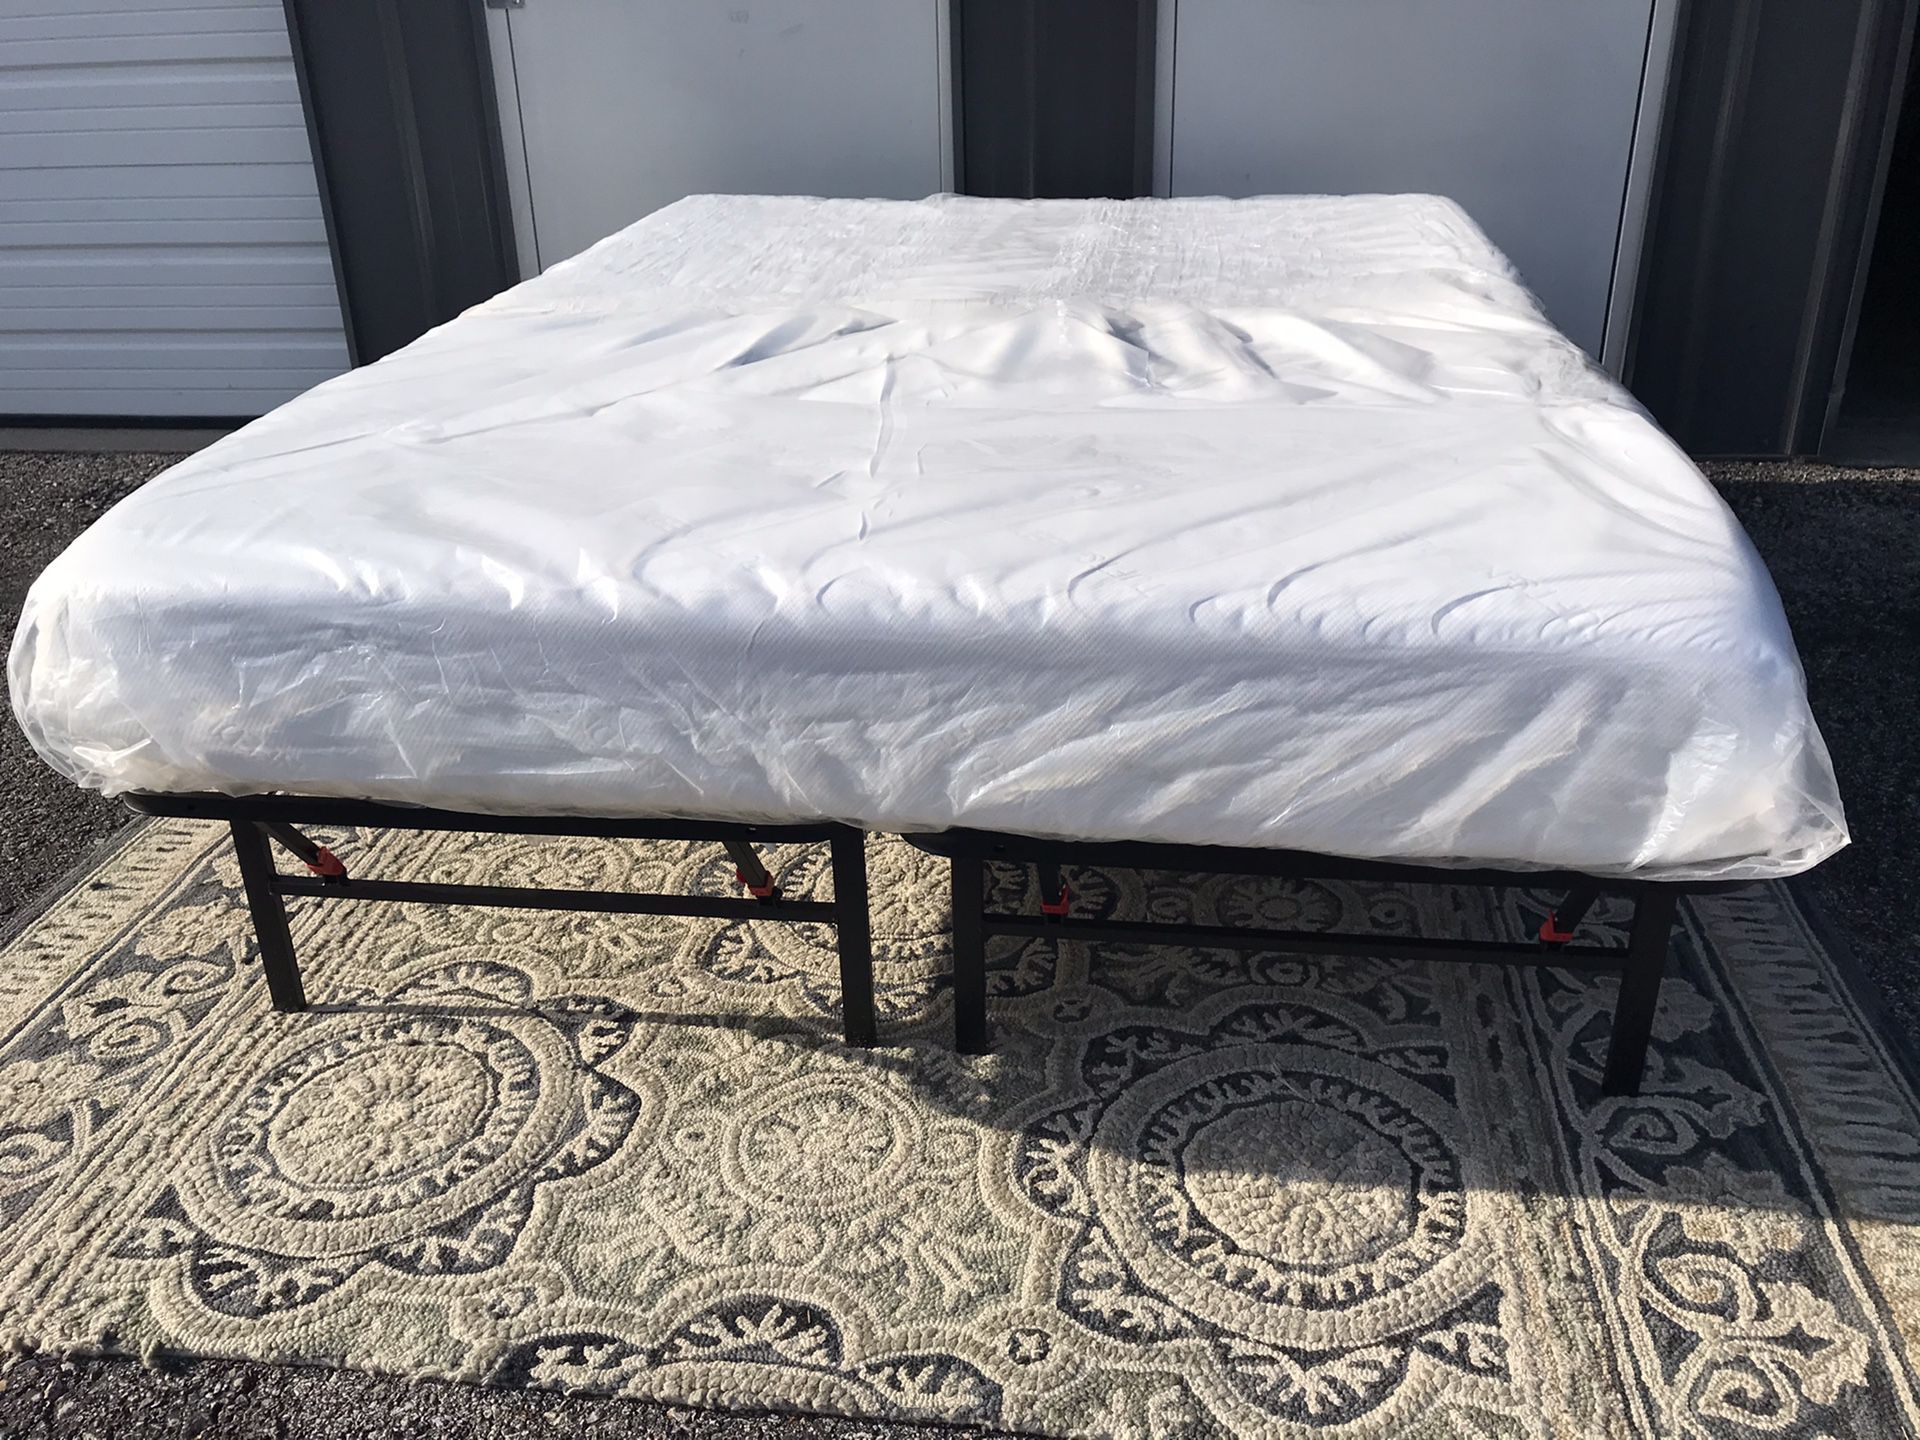 New KING size platform bed frame and memory foam mattress